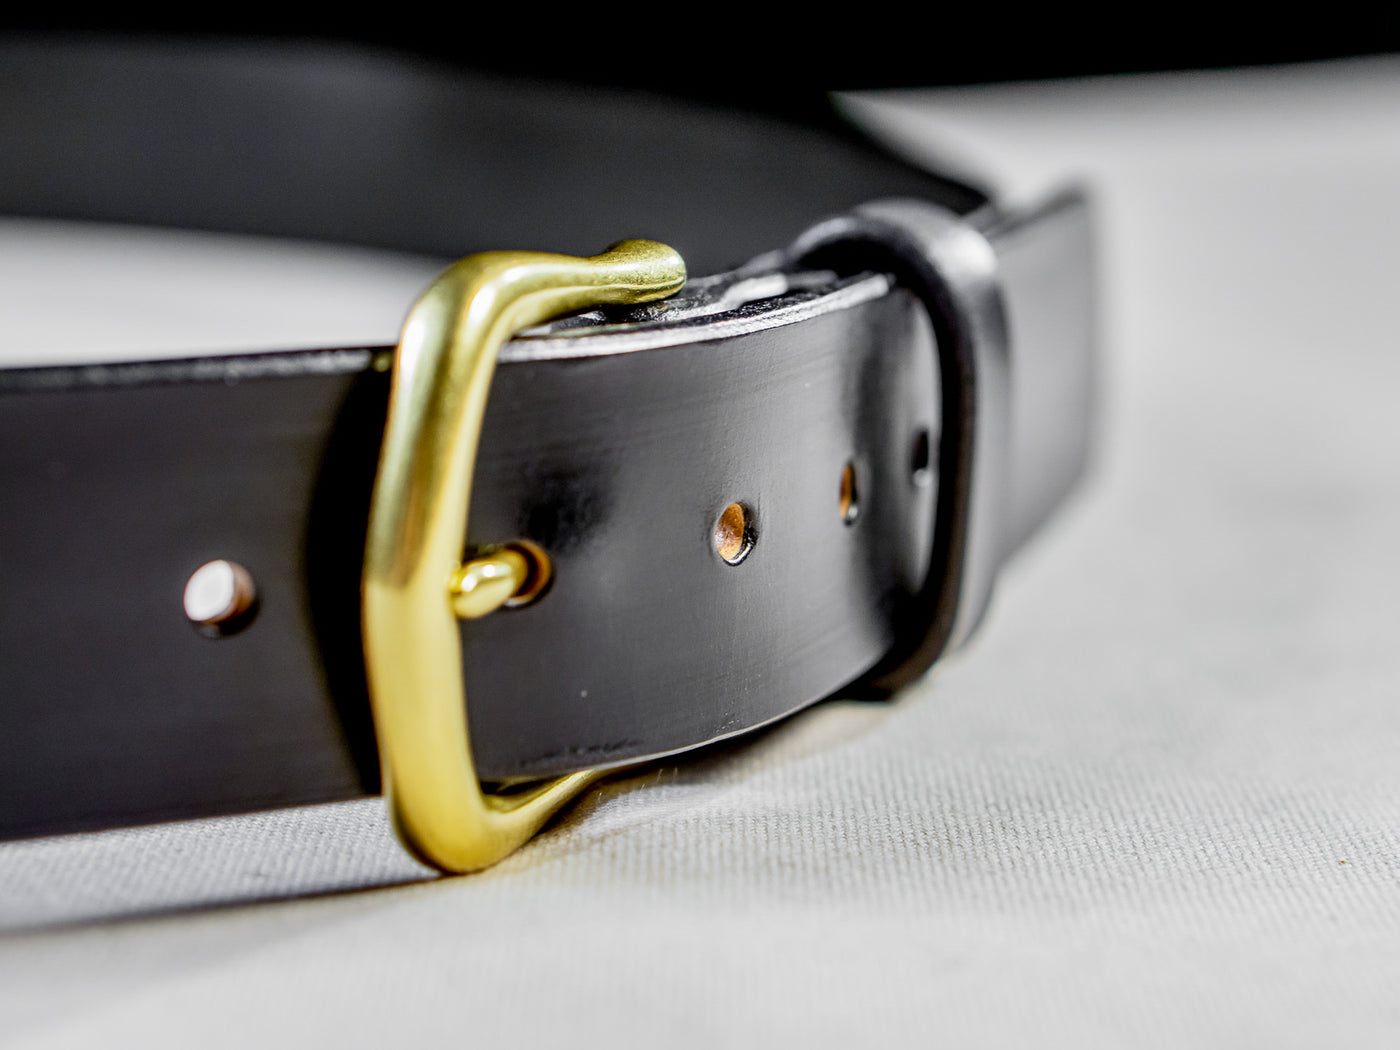 Leather Belt Diem ~ Black Sedgwick Belt with Heel-bar Buckle - Atlas Leathercraft - Handmade Australian Leather Goods